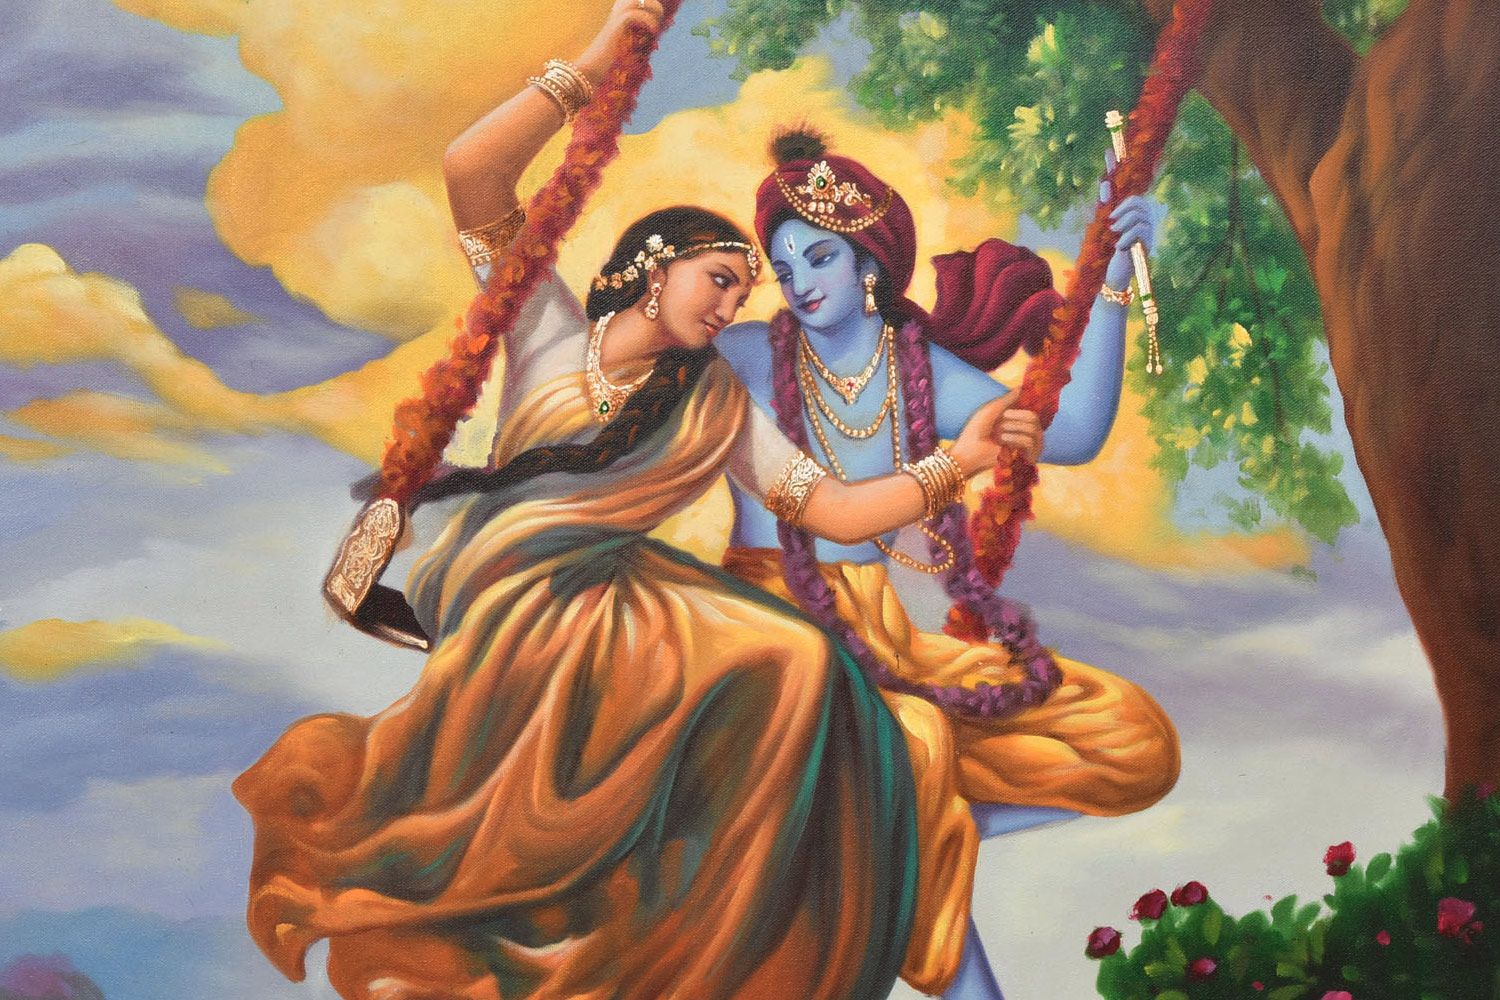 Krishna and Radha, the Hindu symbol of divine love